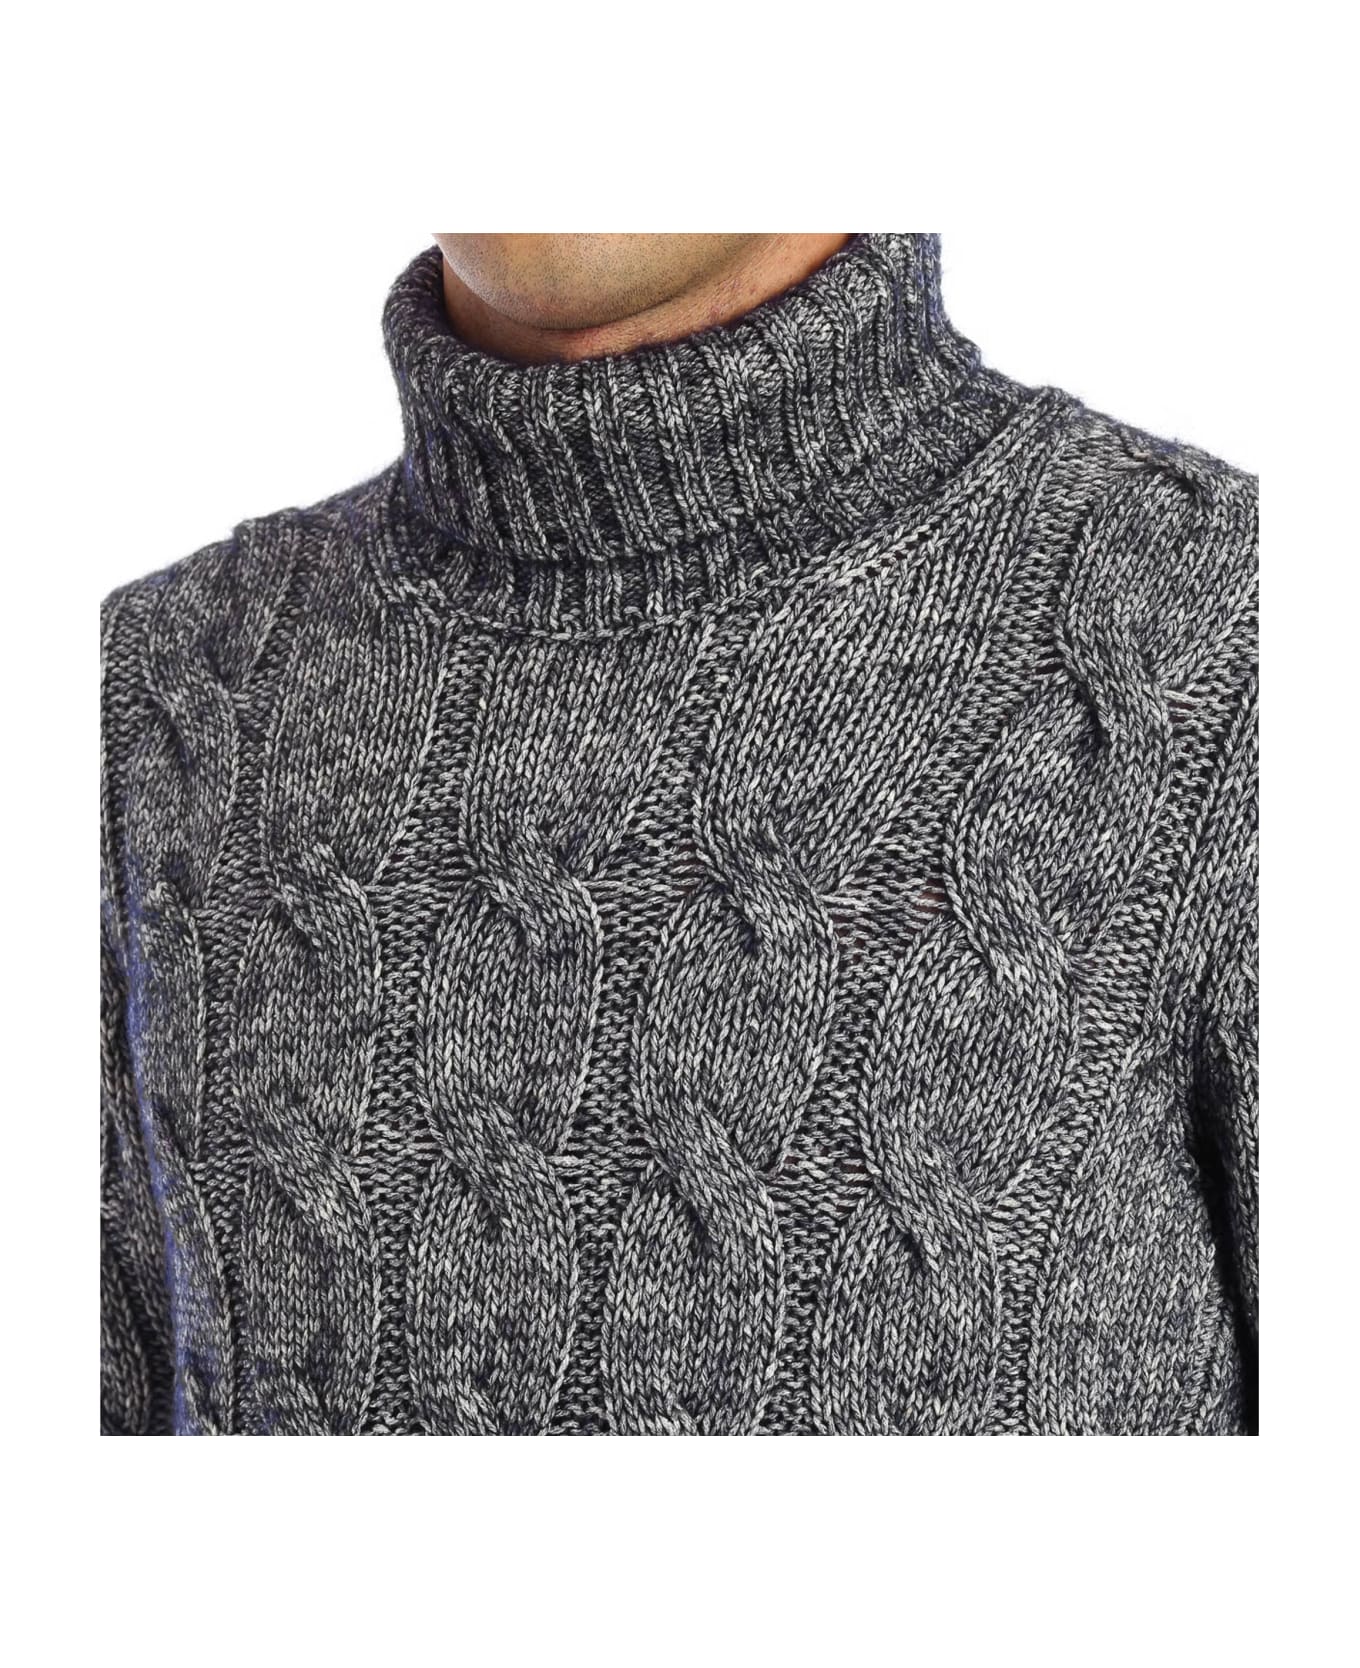 Saint Laurent Turtleneck Sweater - Silver